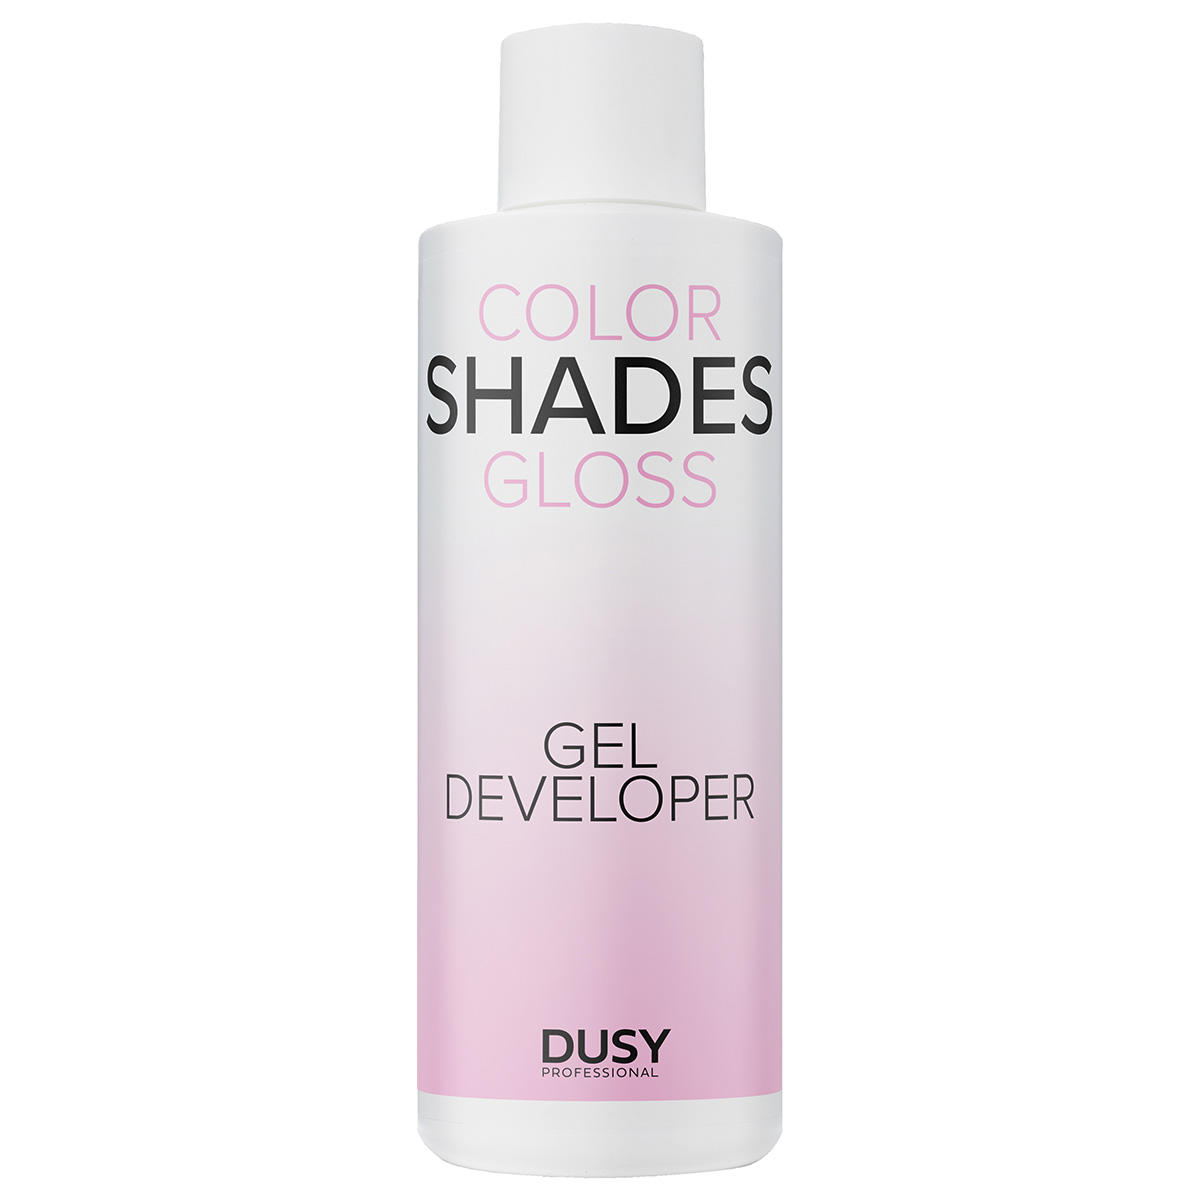 dusy professional Color Shades Gloss Gel Developer 1 Liter